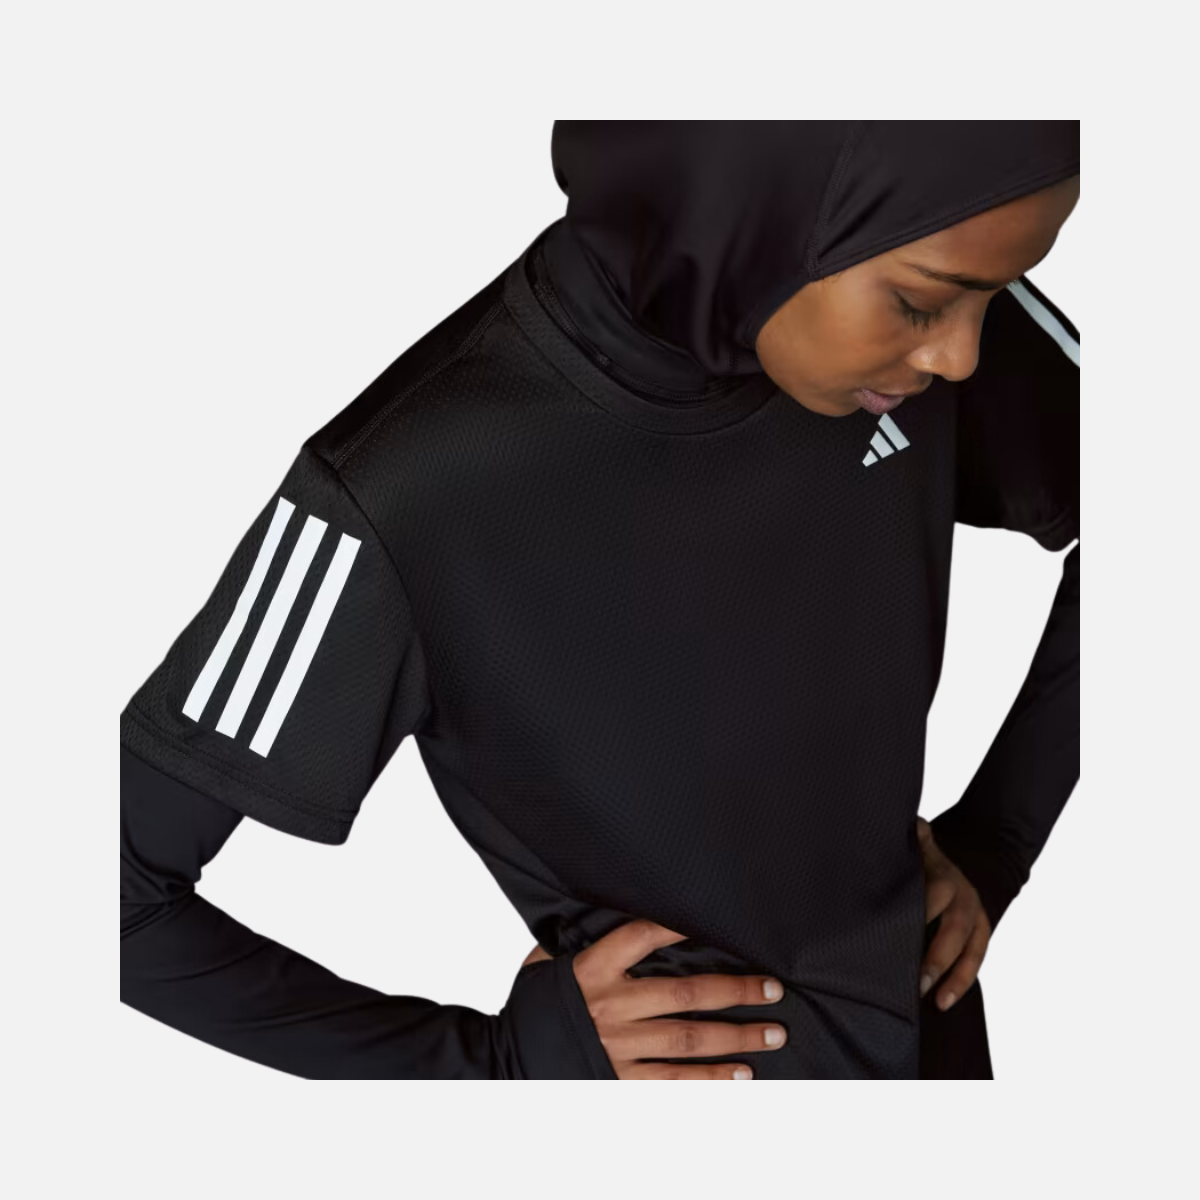 Adidas Own The Women's Running T-shirt -Black